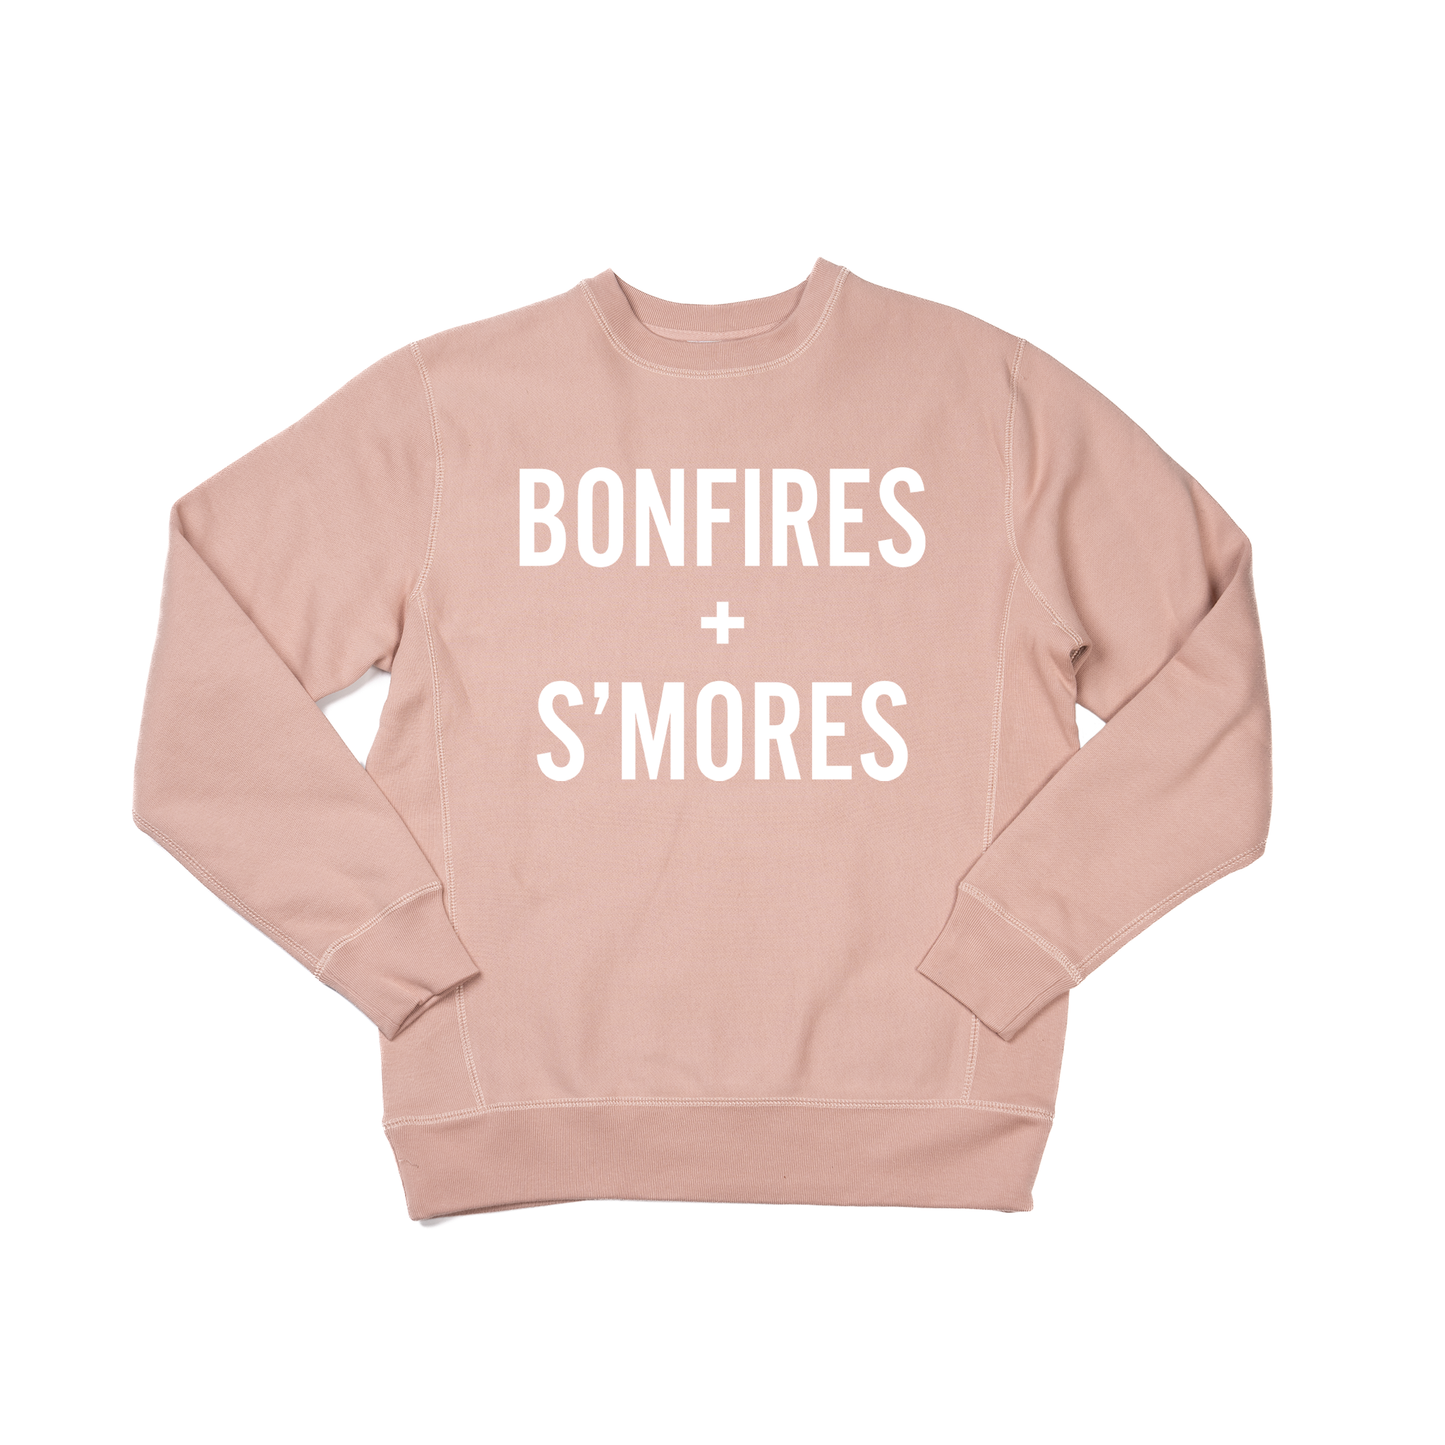 Bonfires + S'mores (White) - Heavyweight Sweatshirt (Dusty Rose)